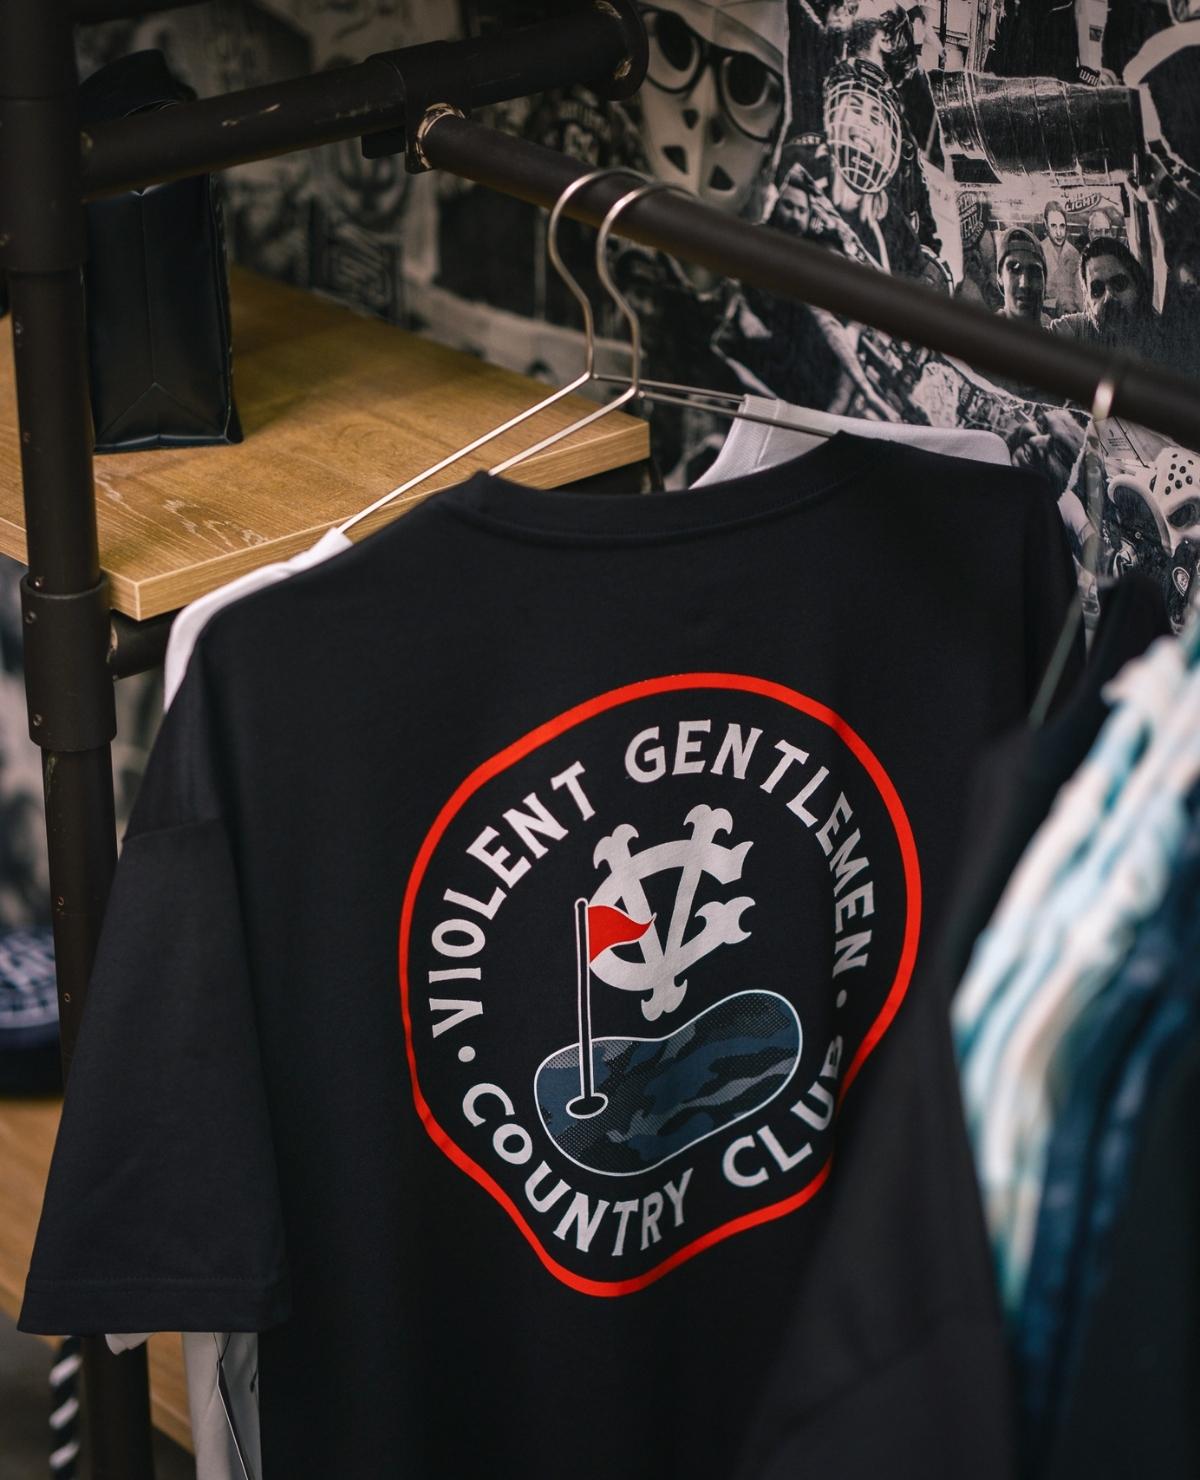 Violent gentlemen hockey clothing company offseason golf country club apparel